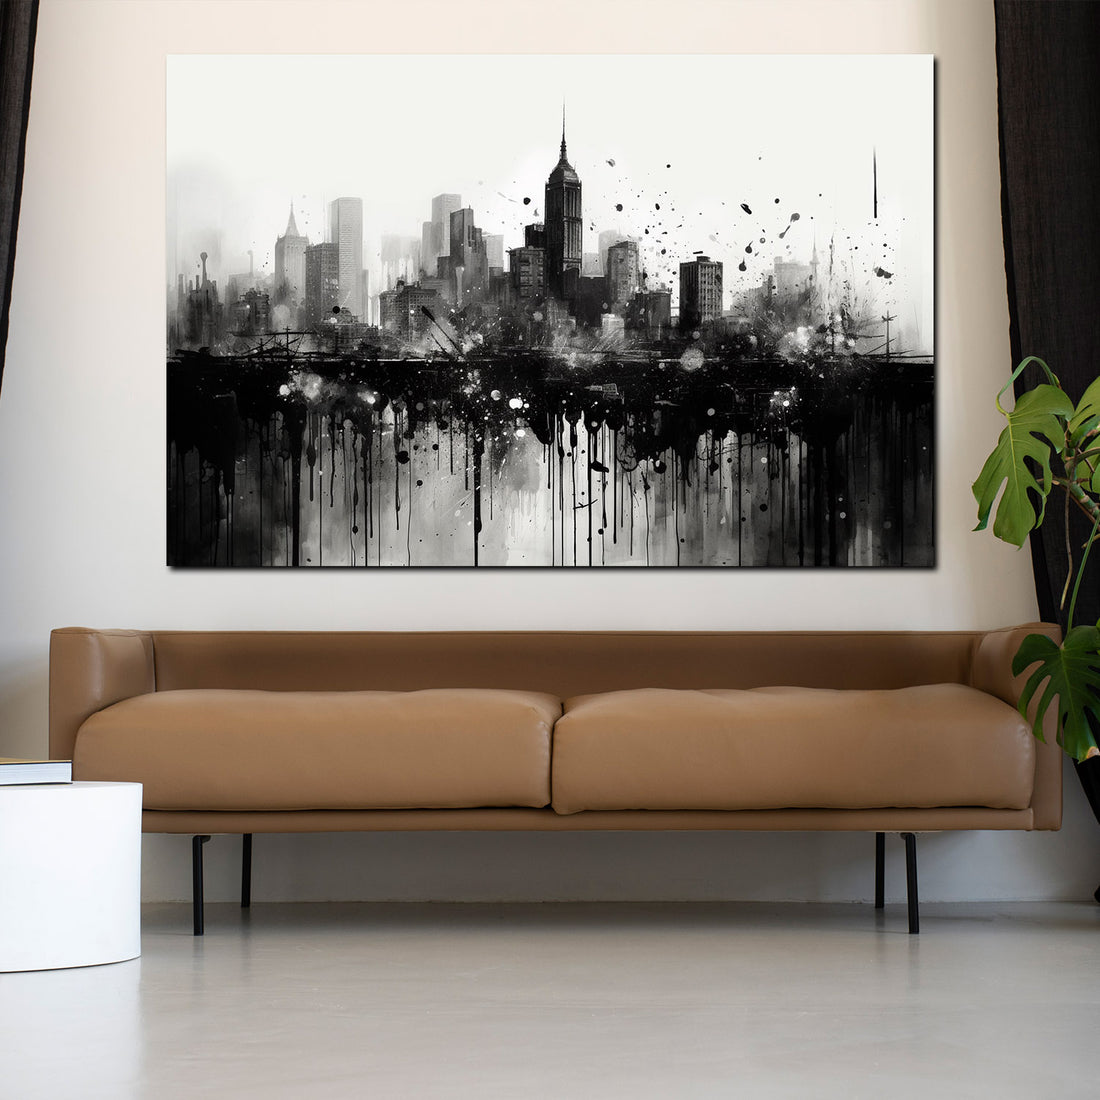 Wandbild USA New York abstrakt schwarz weiß, USA